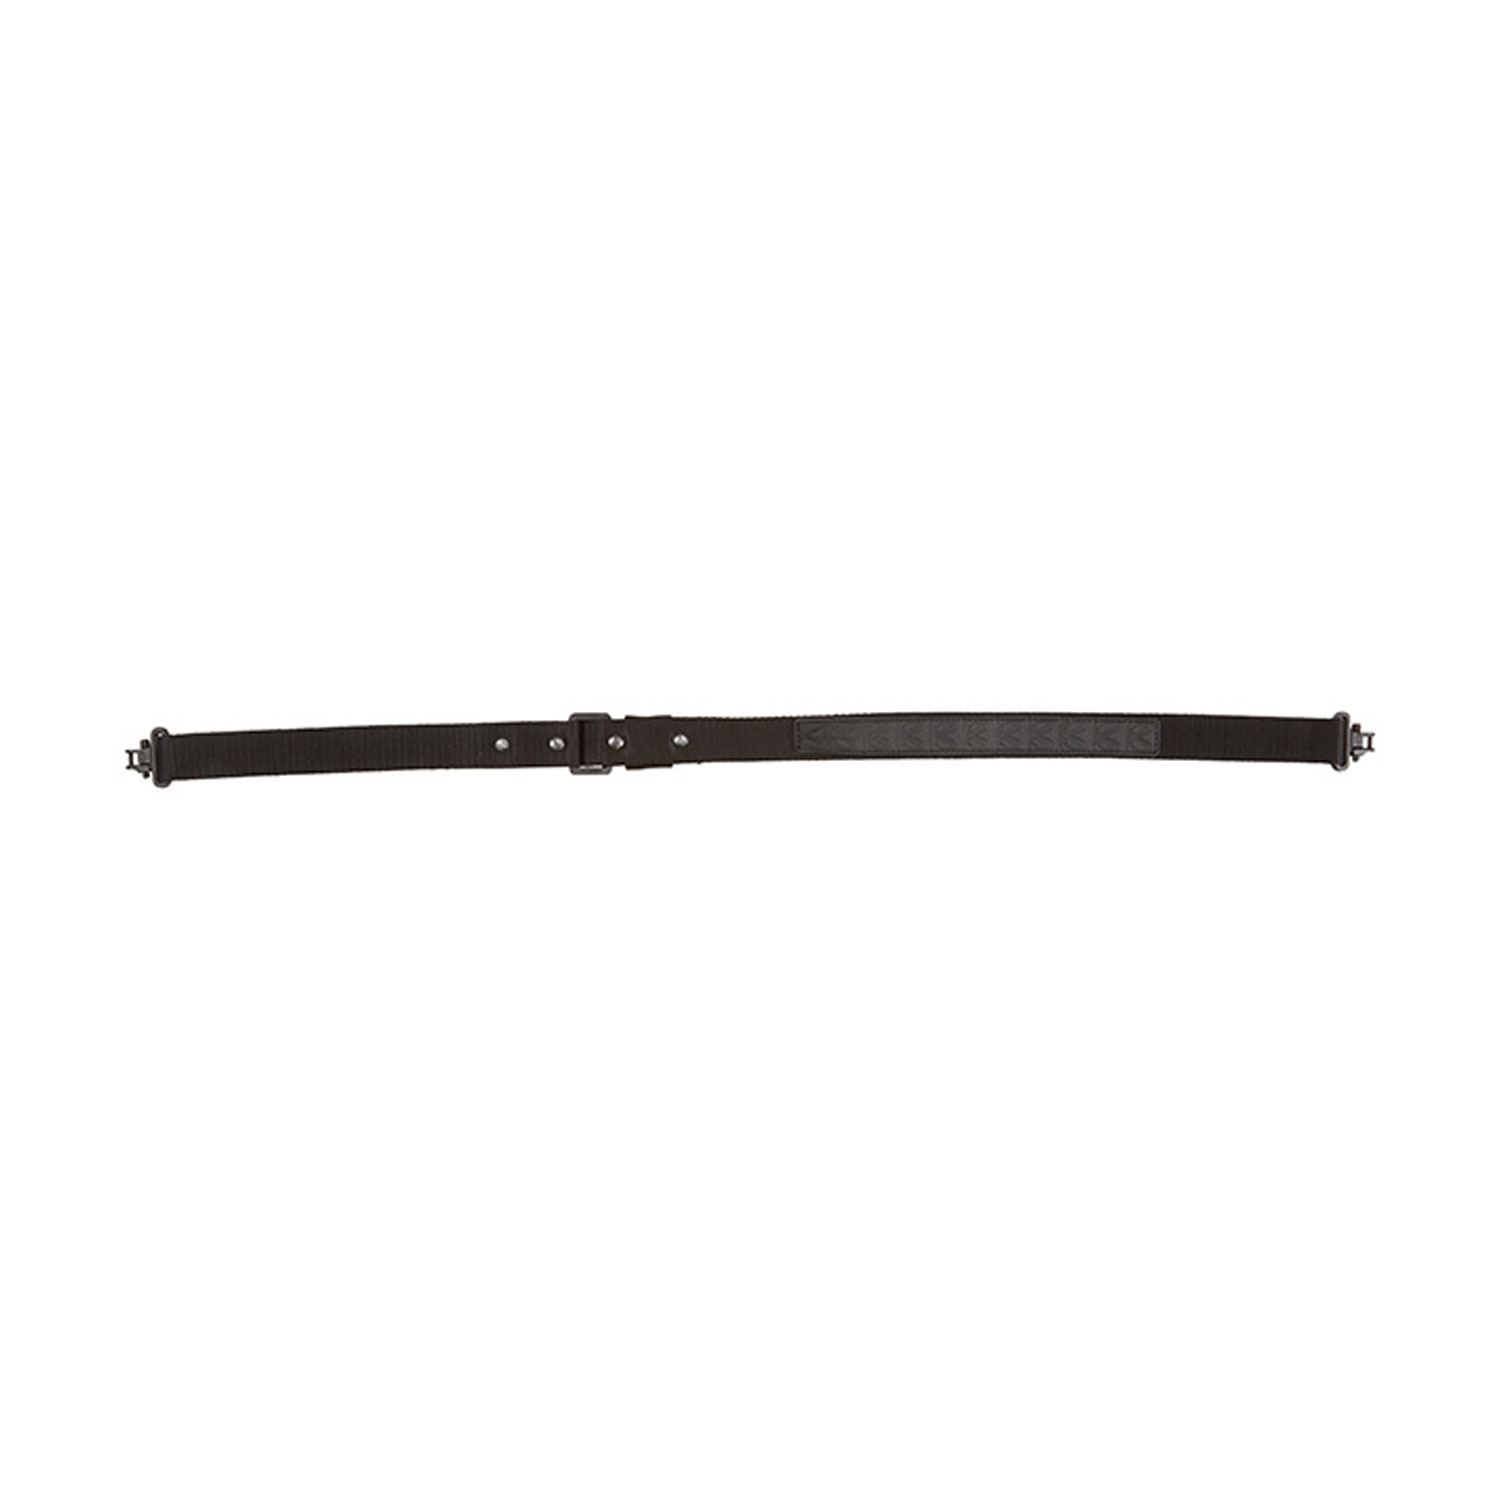 Allen 8489 Slide-N-Lock Sling made of Black Nylon with BakTrak Back, Adjustable Design & Swivels for Rifles